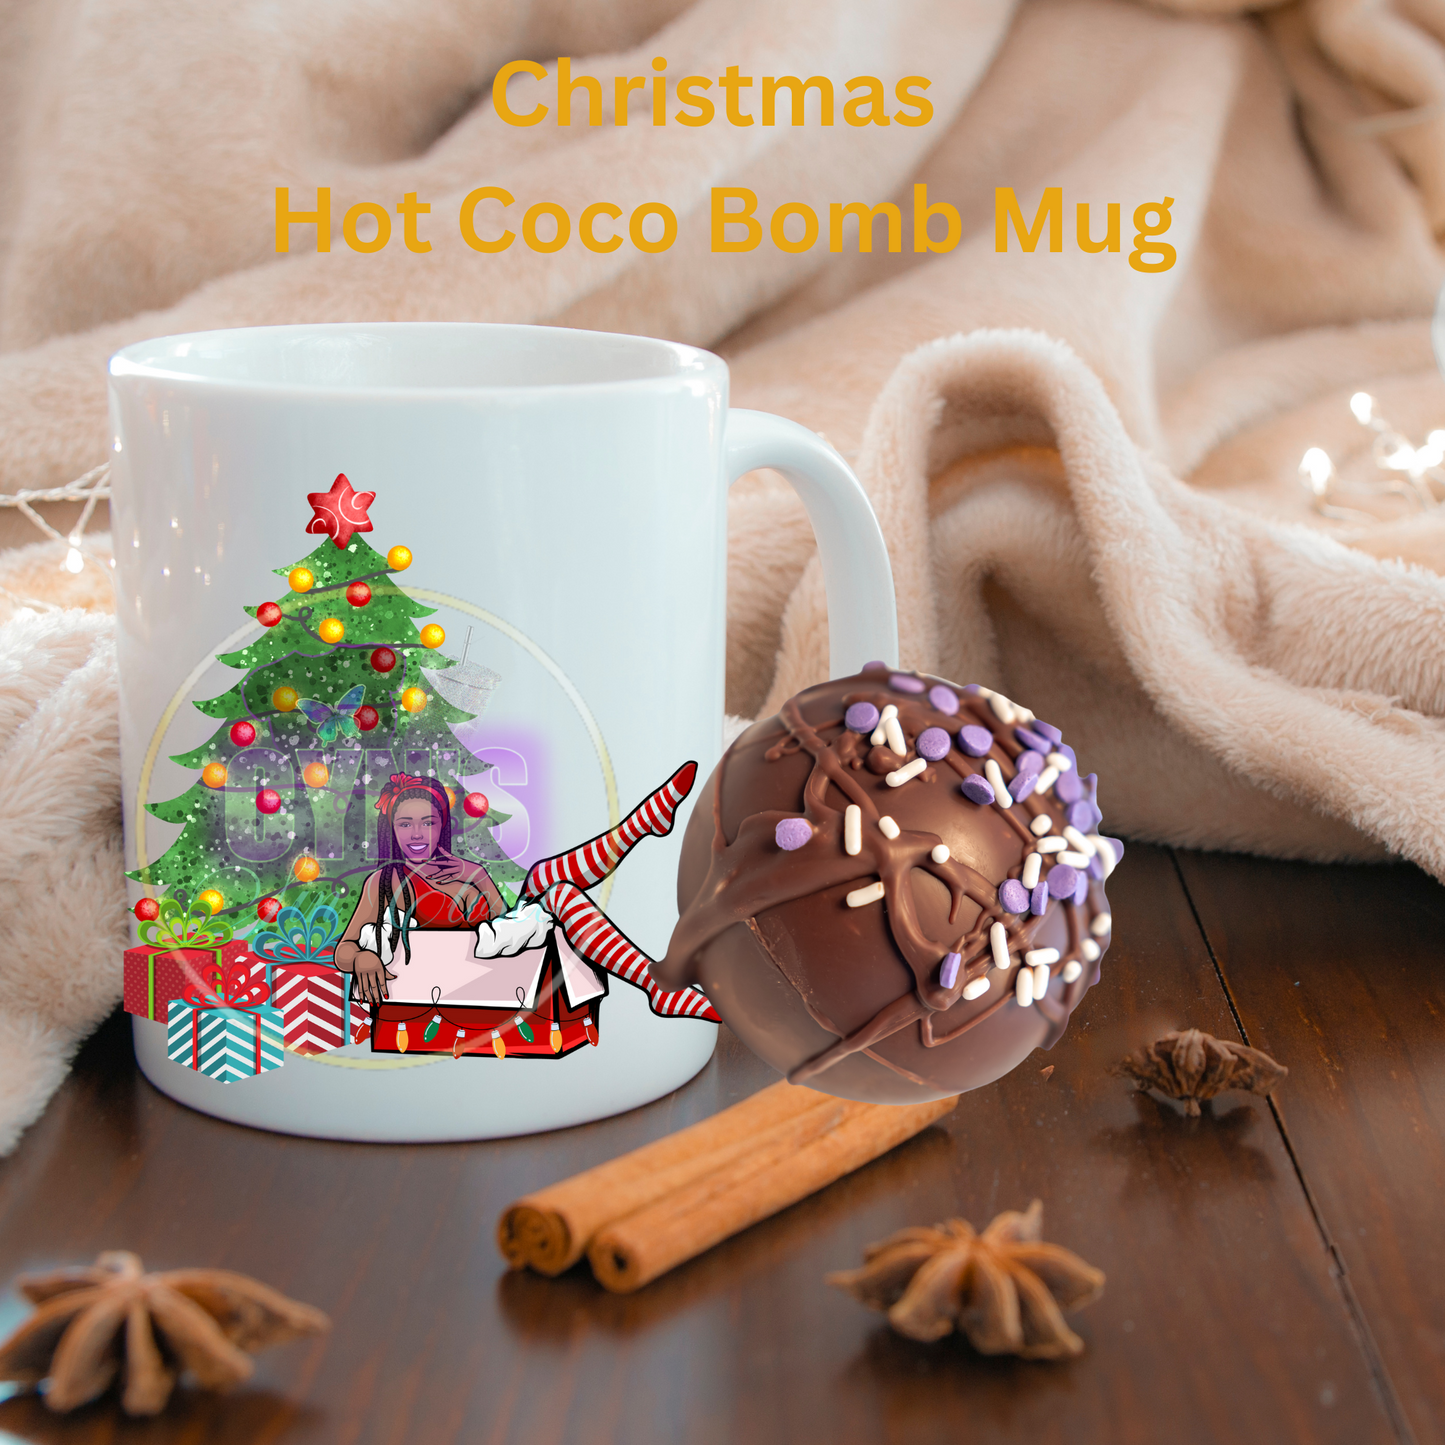 Holiday Mug with Hot Coco Bomb